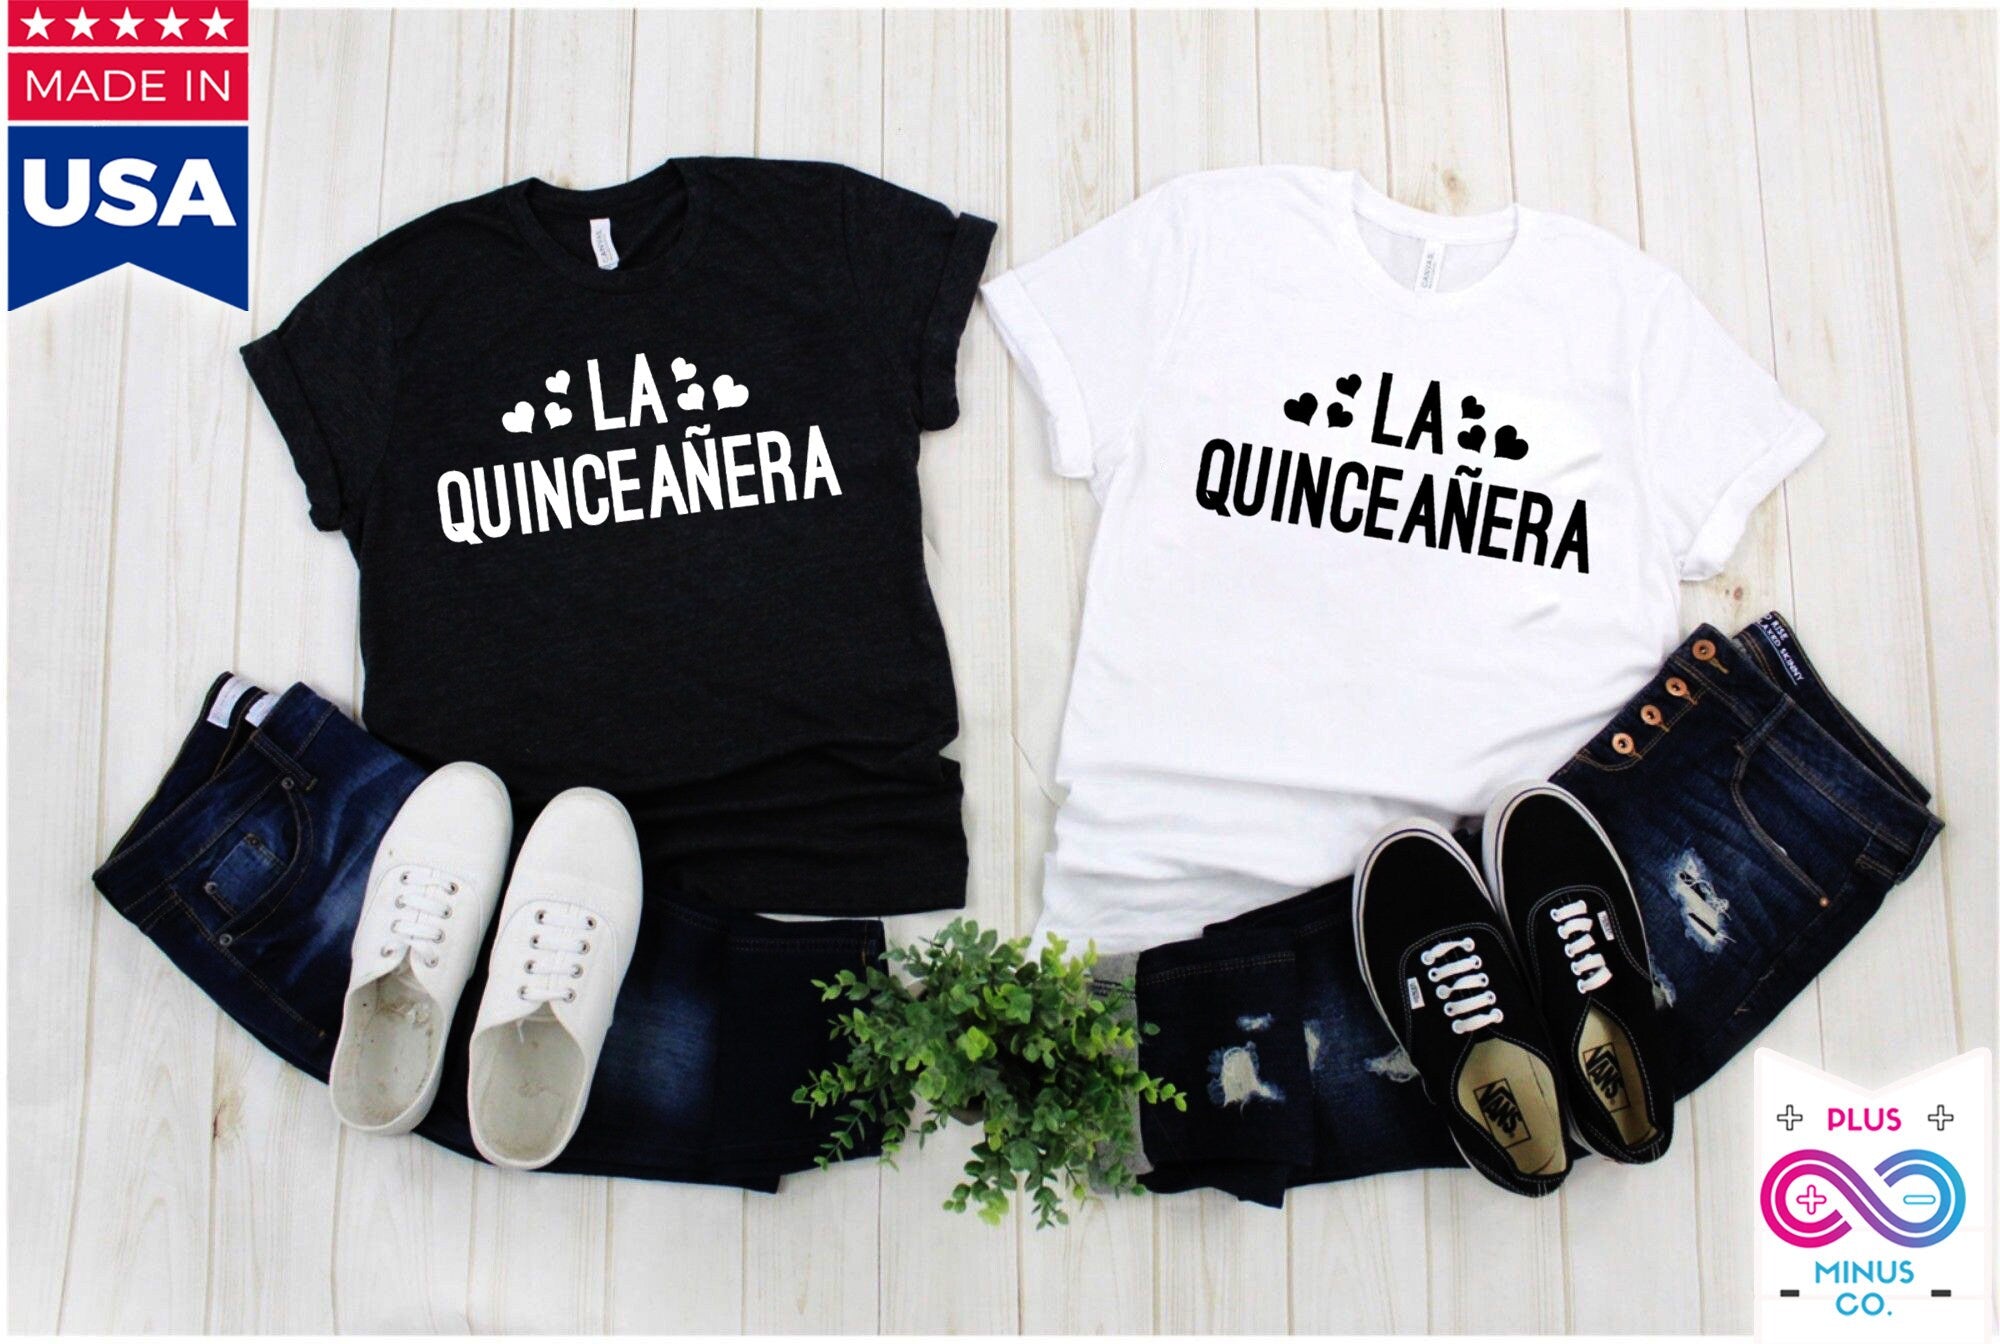 La Quinceañera Latina İspanyol Tişörtleri,Meksika Gömlek Quinceanera Hediye Prova Parti Kıyafeti, Ayva Anos Partisi ayva gömlekleri - plusminusco.com